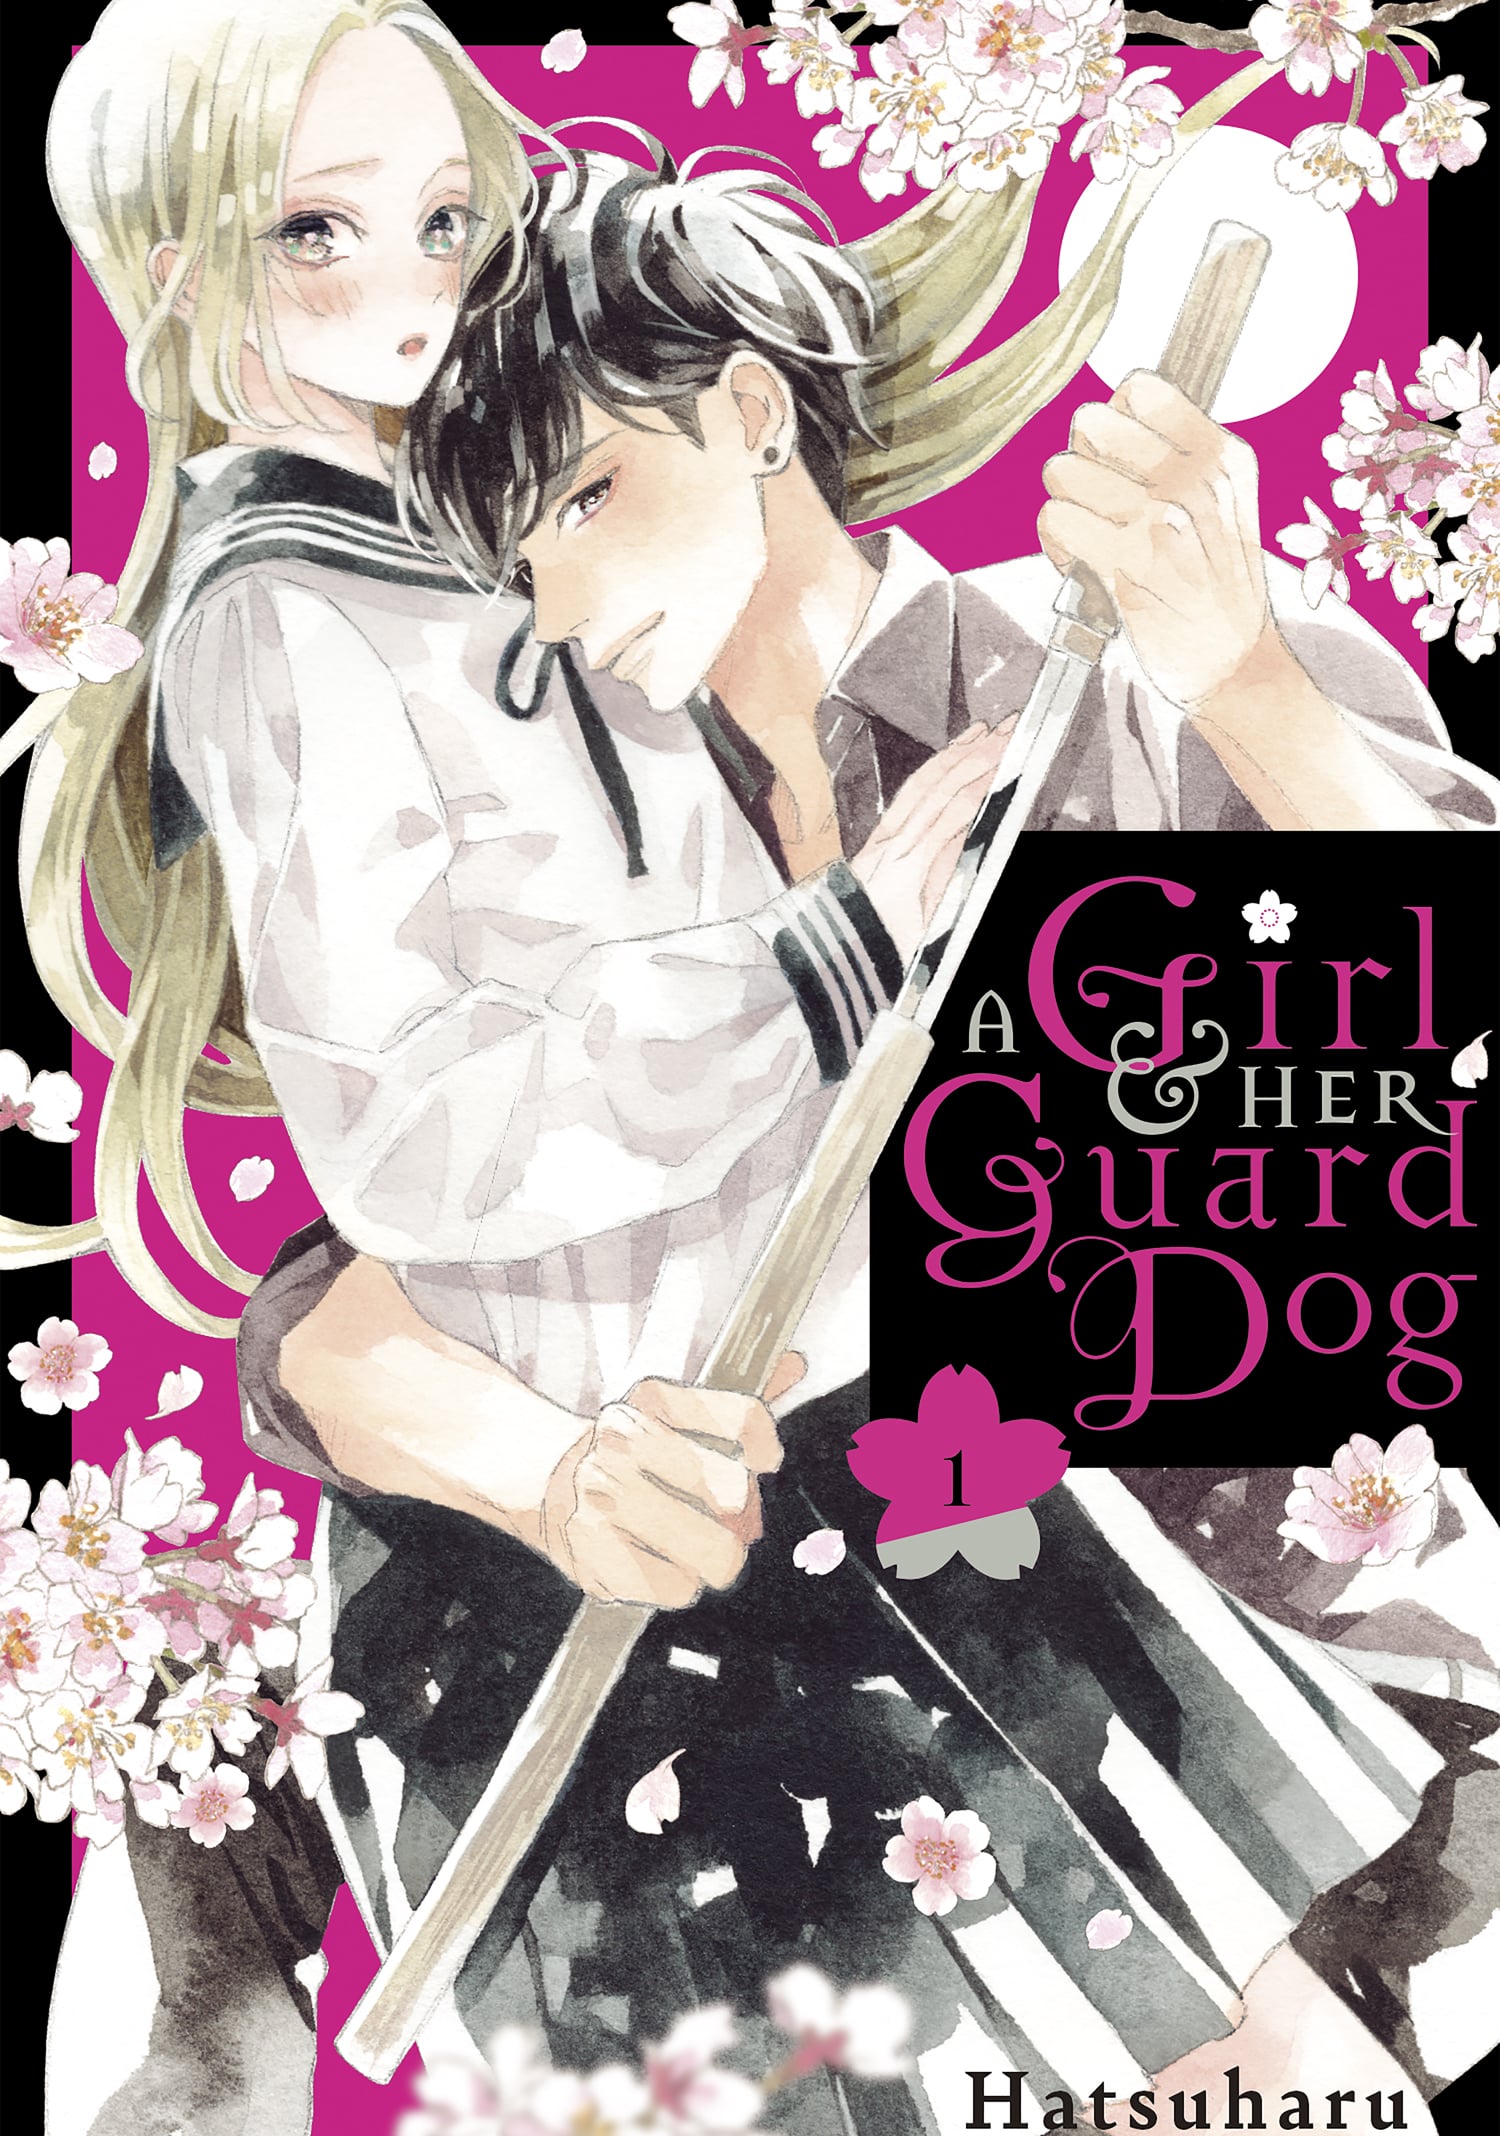 A Girl & Her Guard Dog anime adaptation